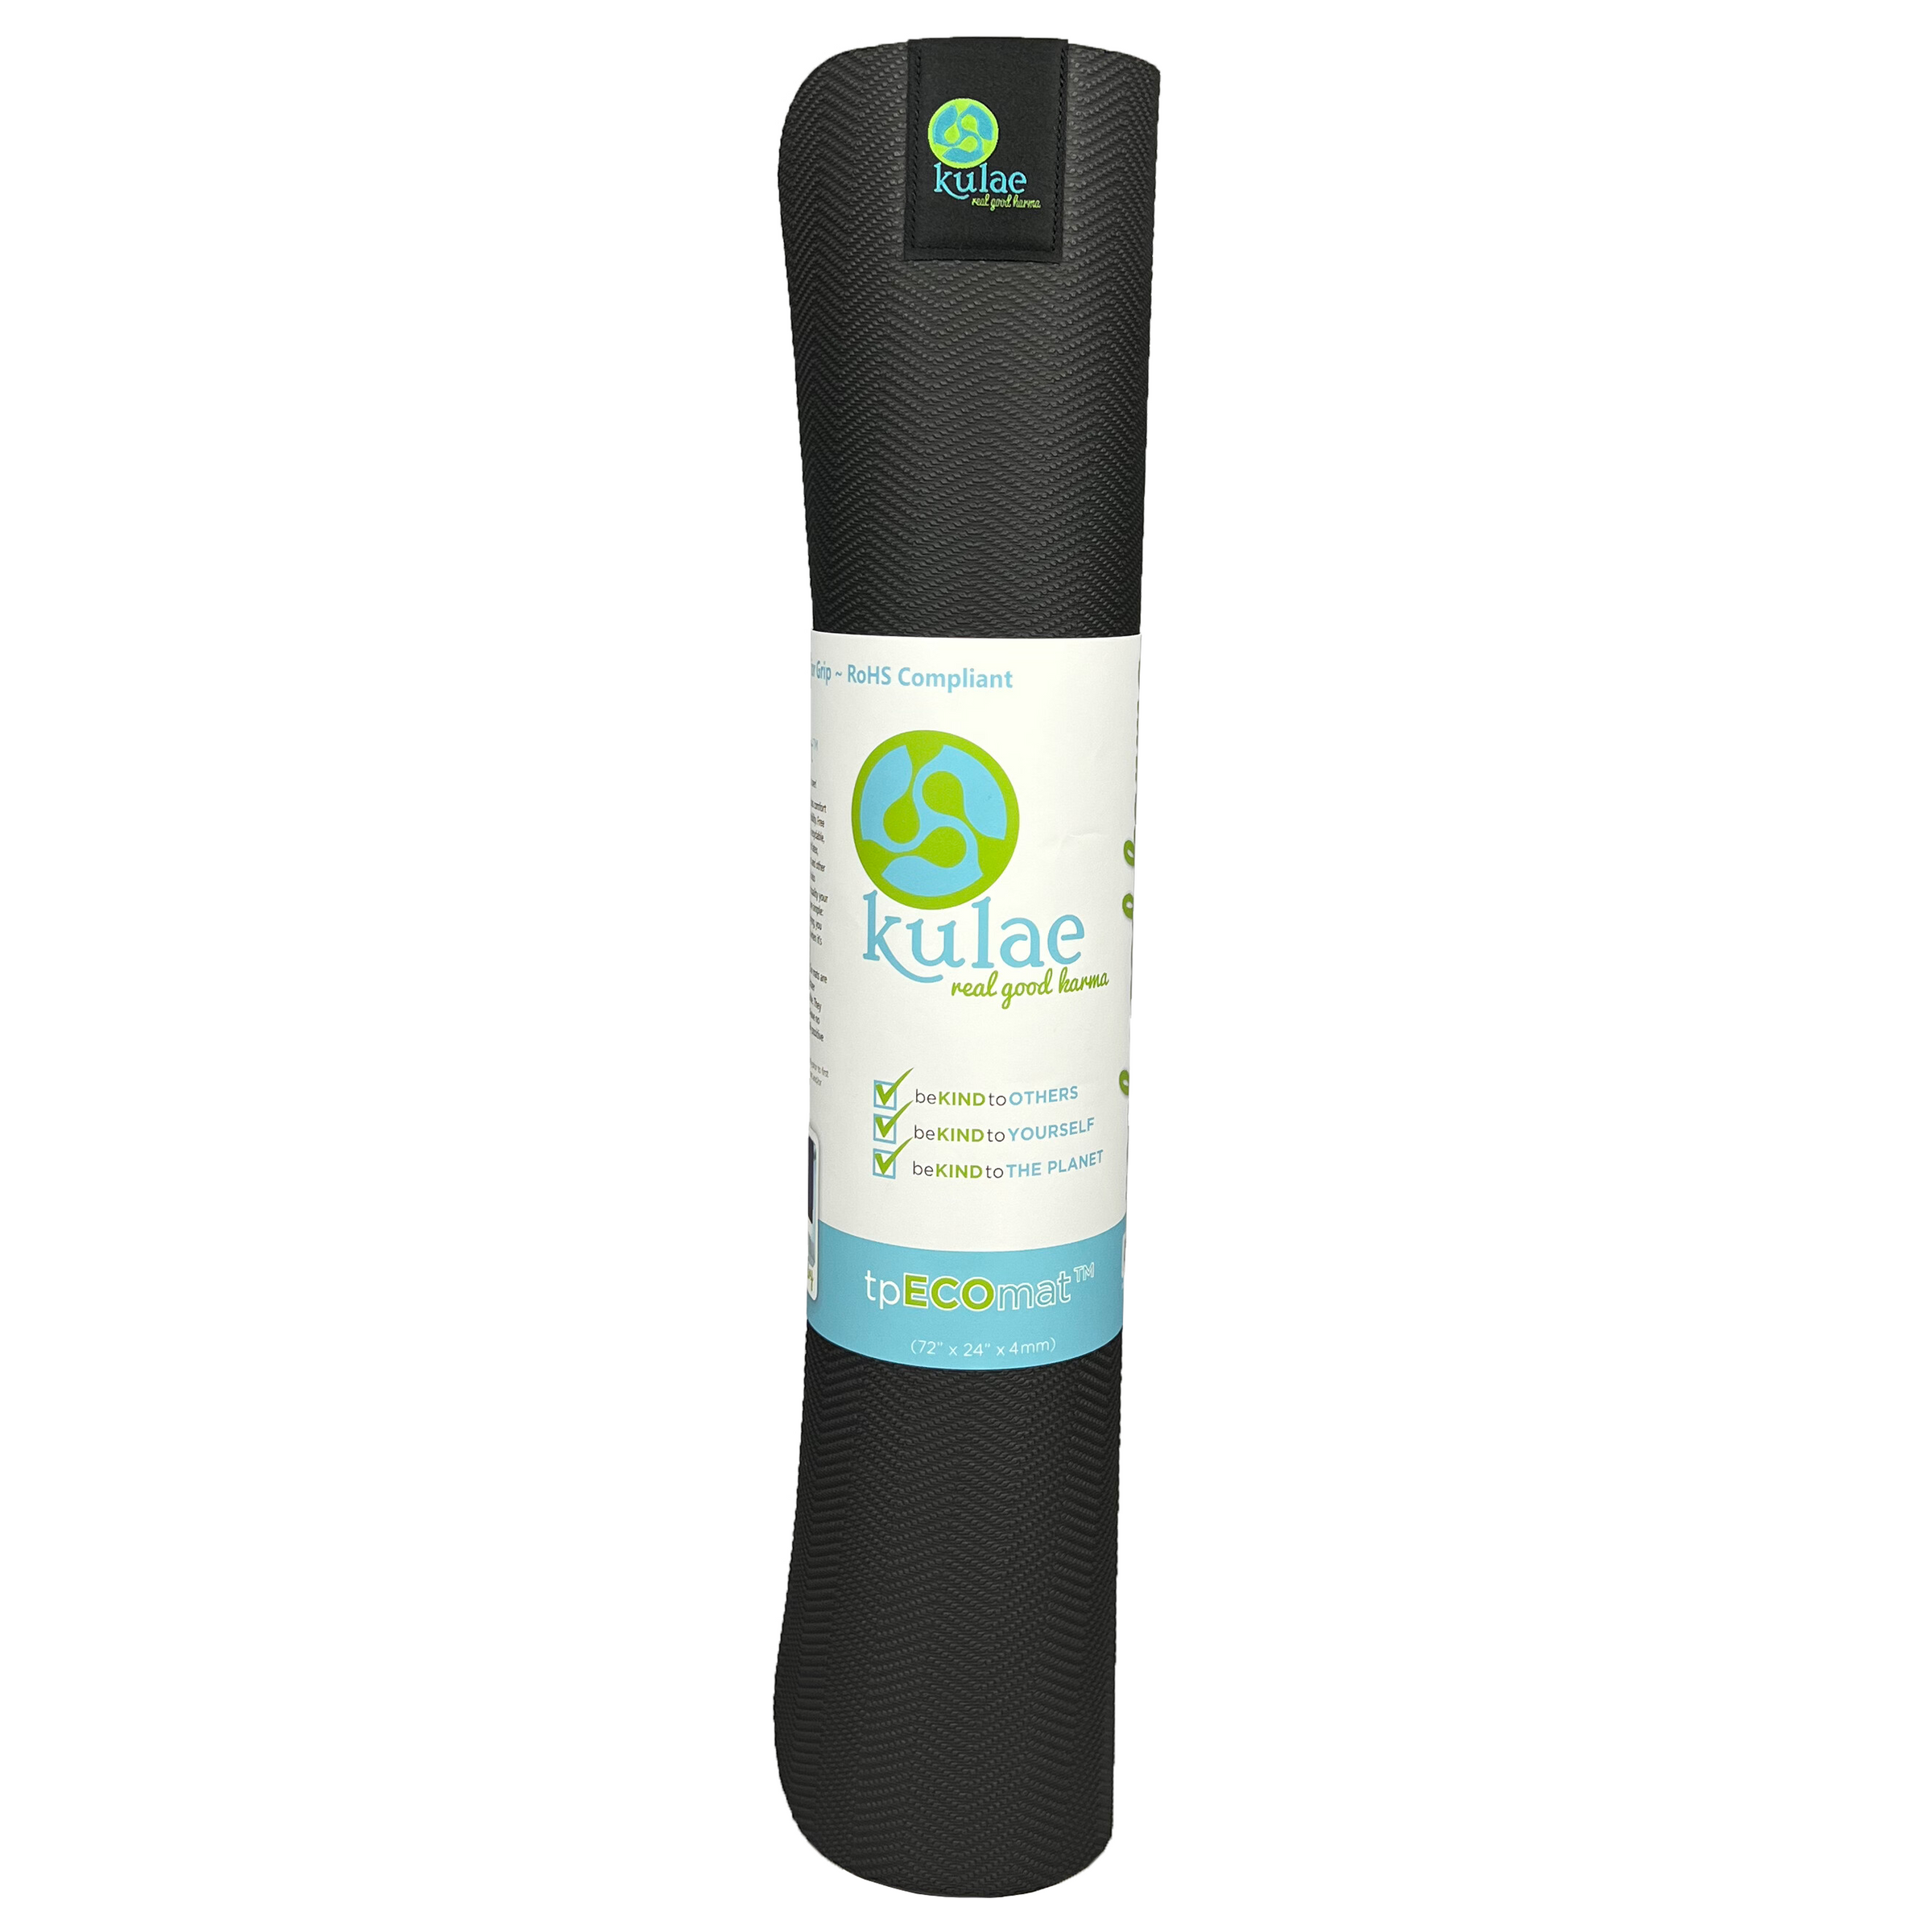 Kulae Yoga Mat - 3mm, Eco friendly, Lightweight